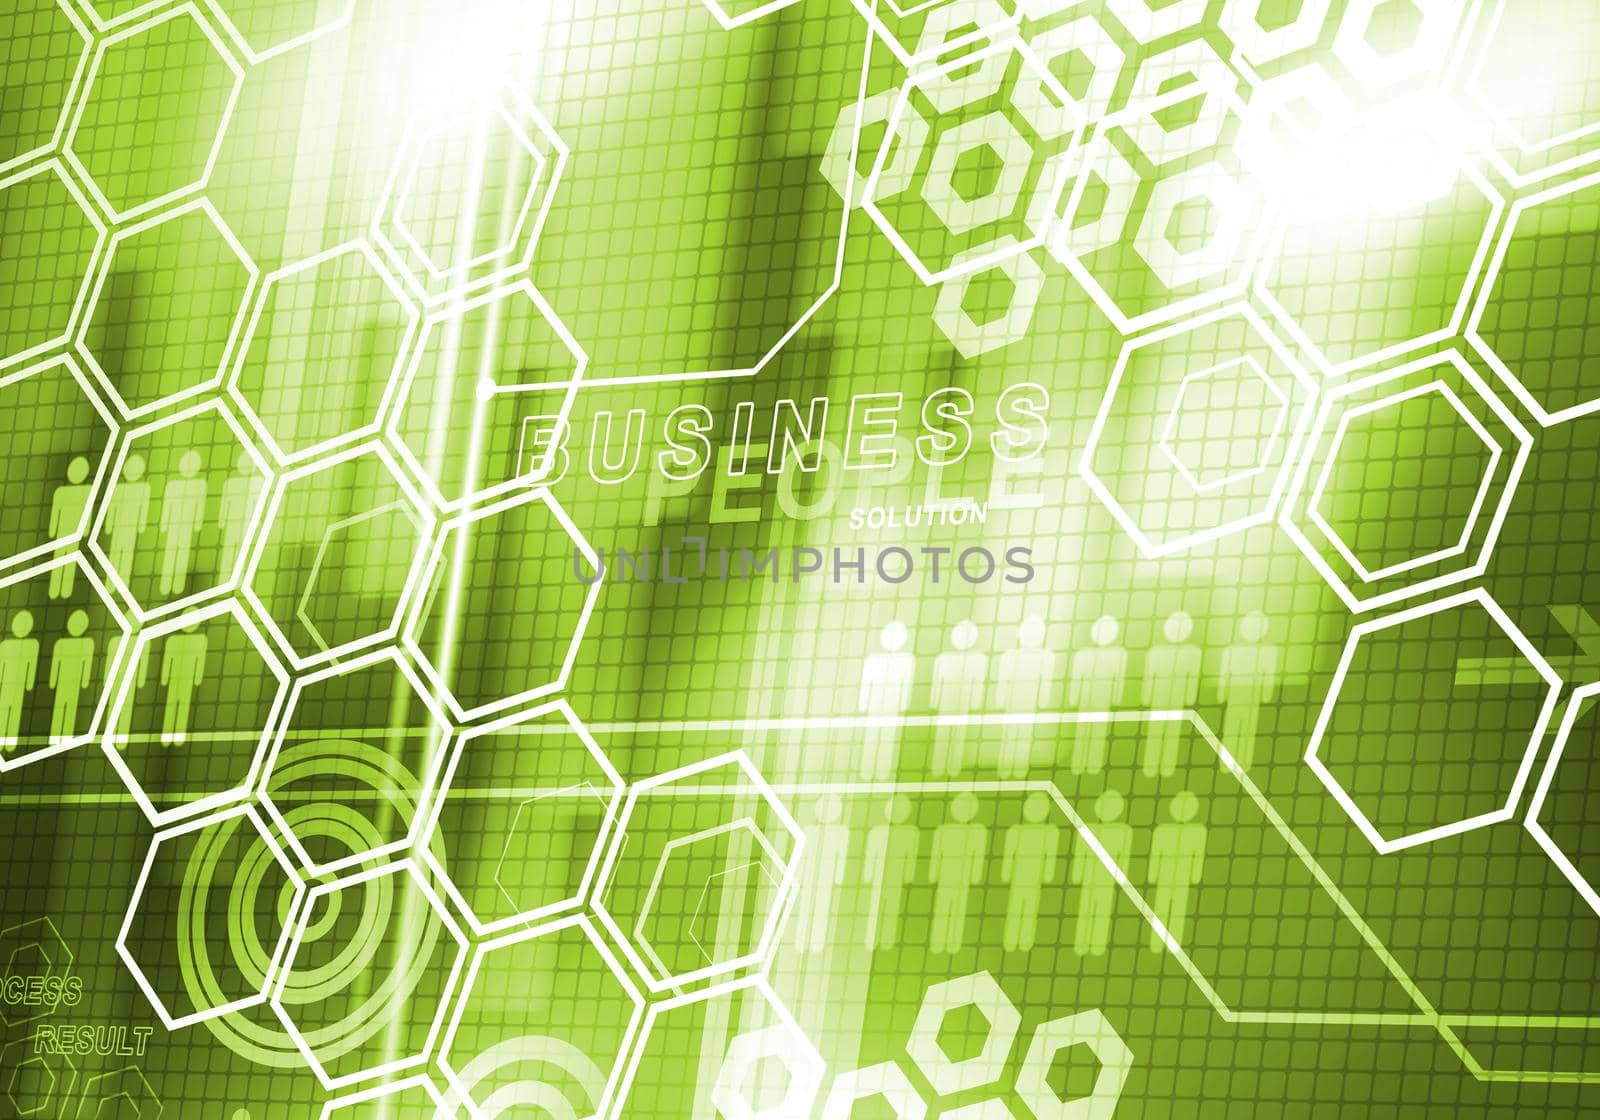 Digital background image presenting modern business concepts